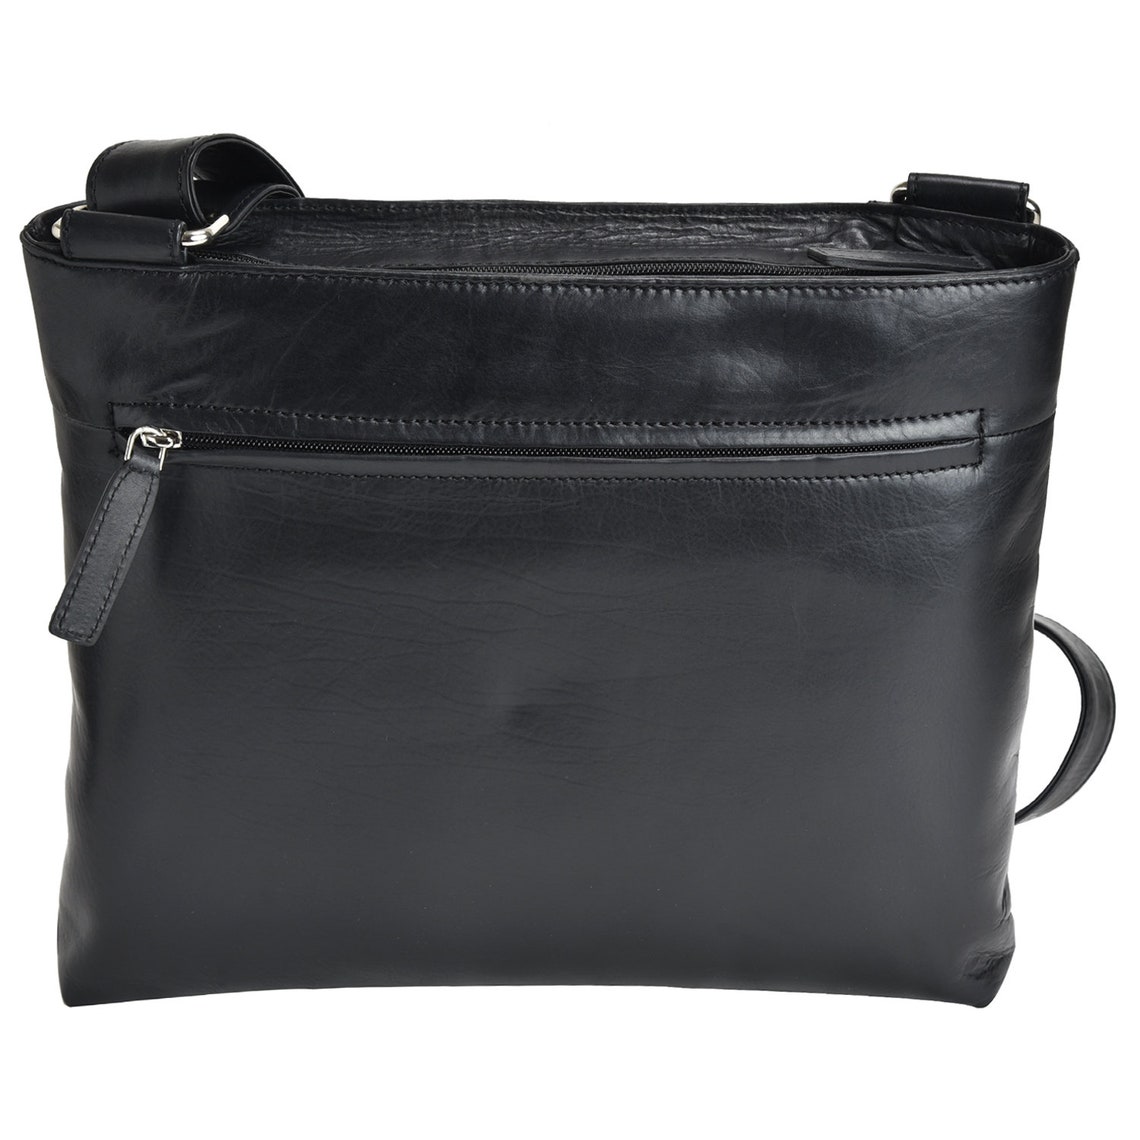 AVA Leather Casual Crossbody Bag Shoulder Bag Ladies Handbag | Etsy